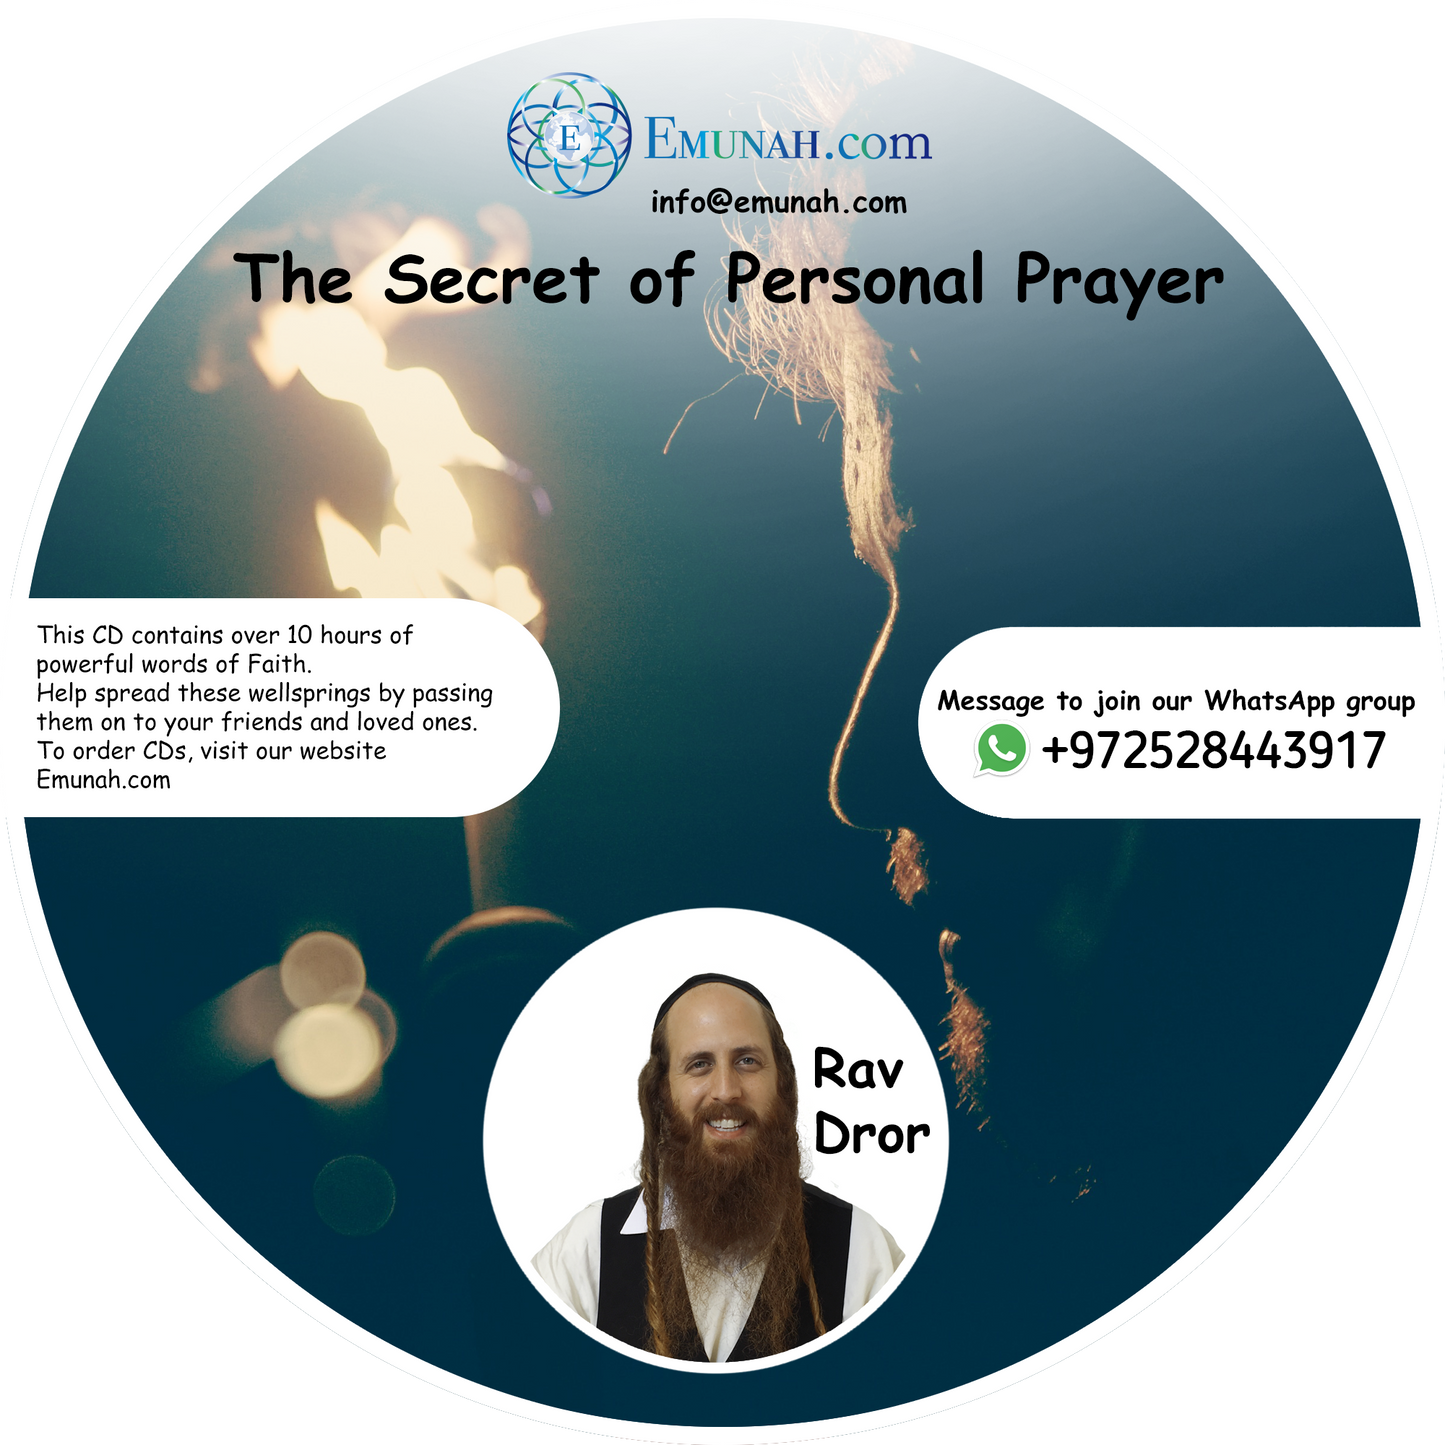 The Secret of Personal Prayer